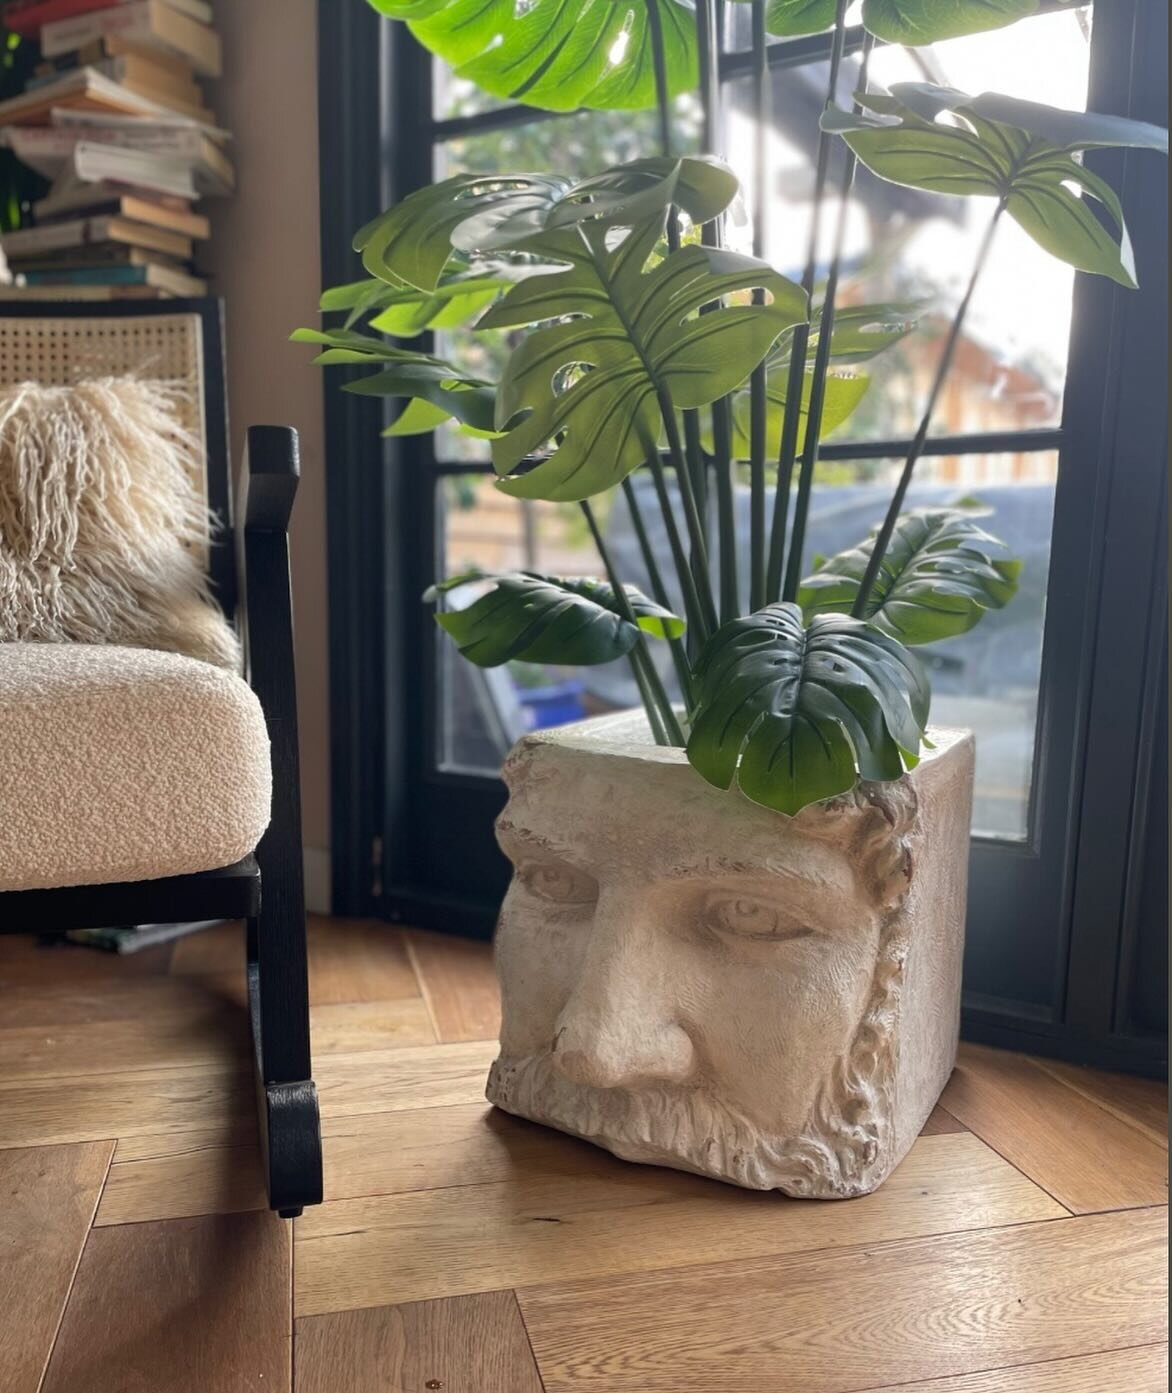 Sunday vibes with our stone effect planter ❤️

#plants #fauxplants #indoorplants #classicaldecor #romandecor